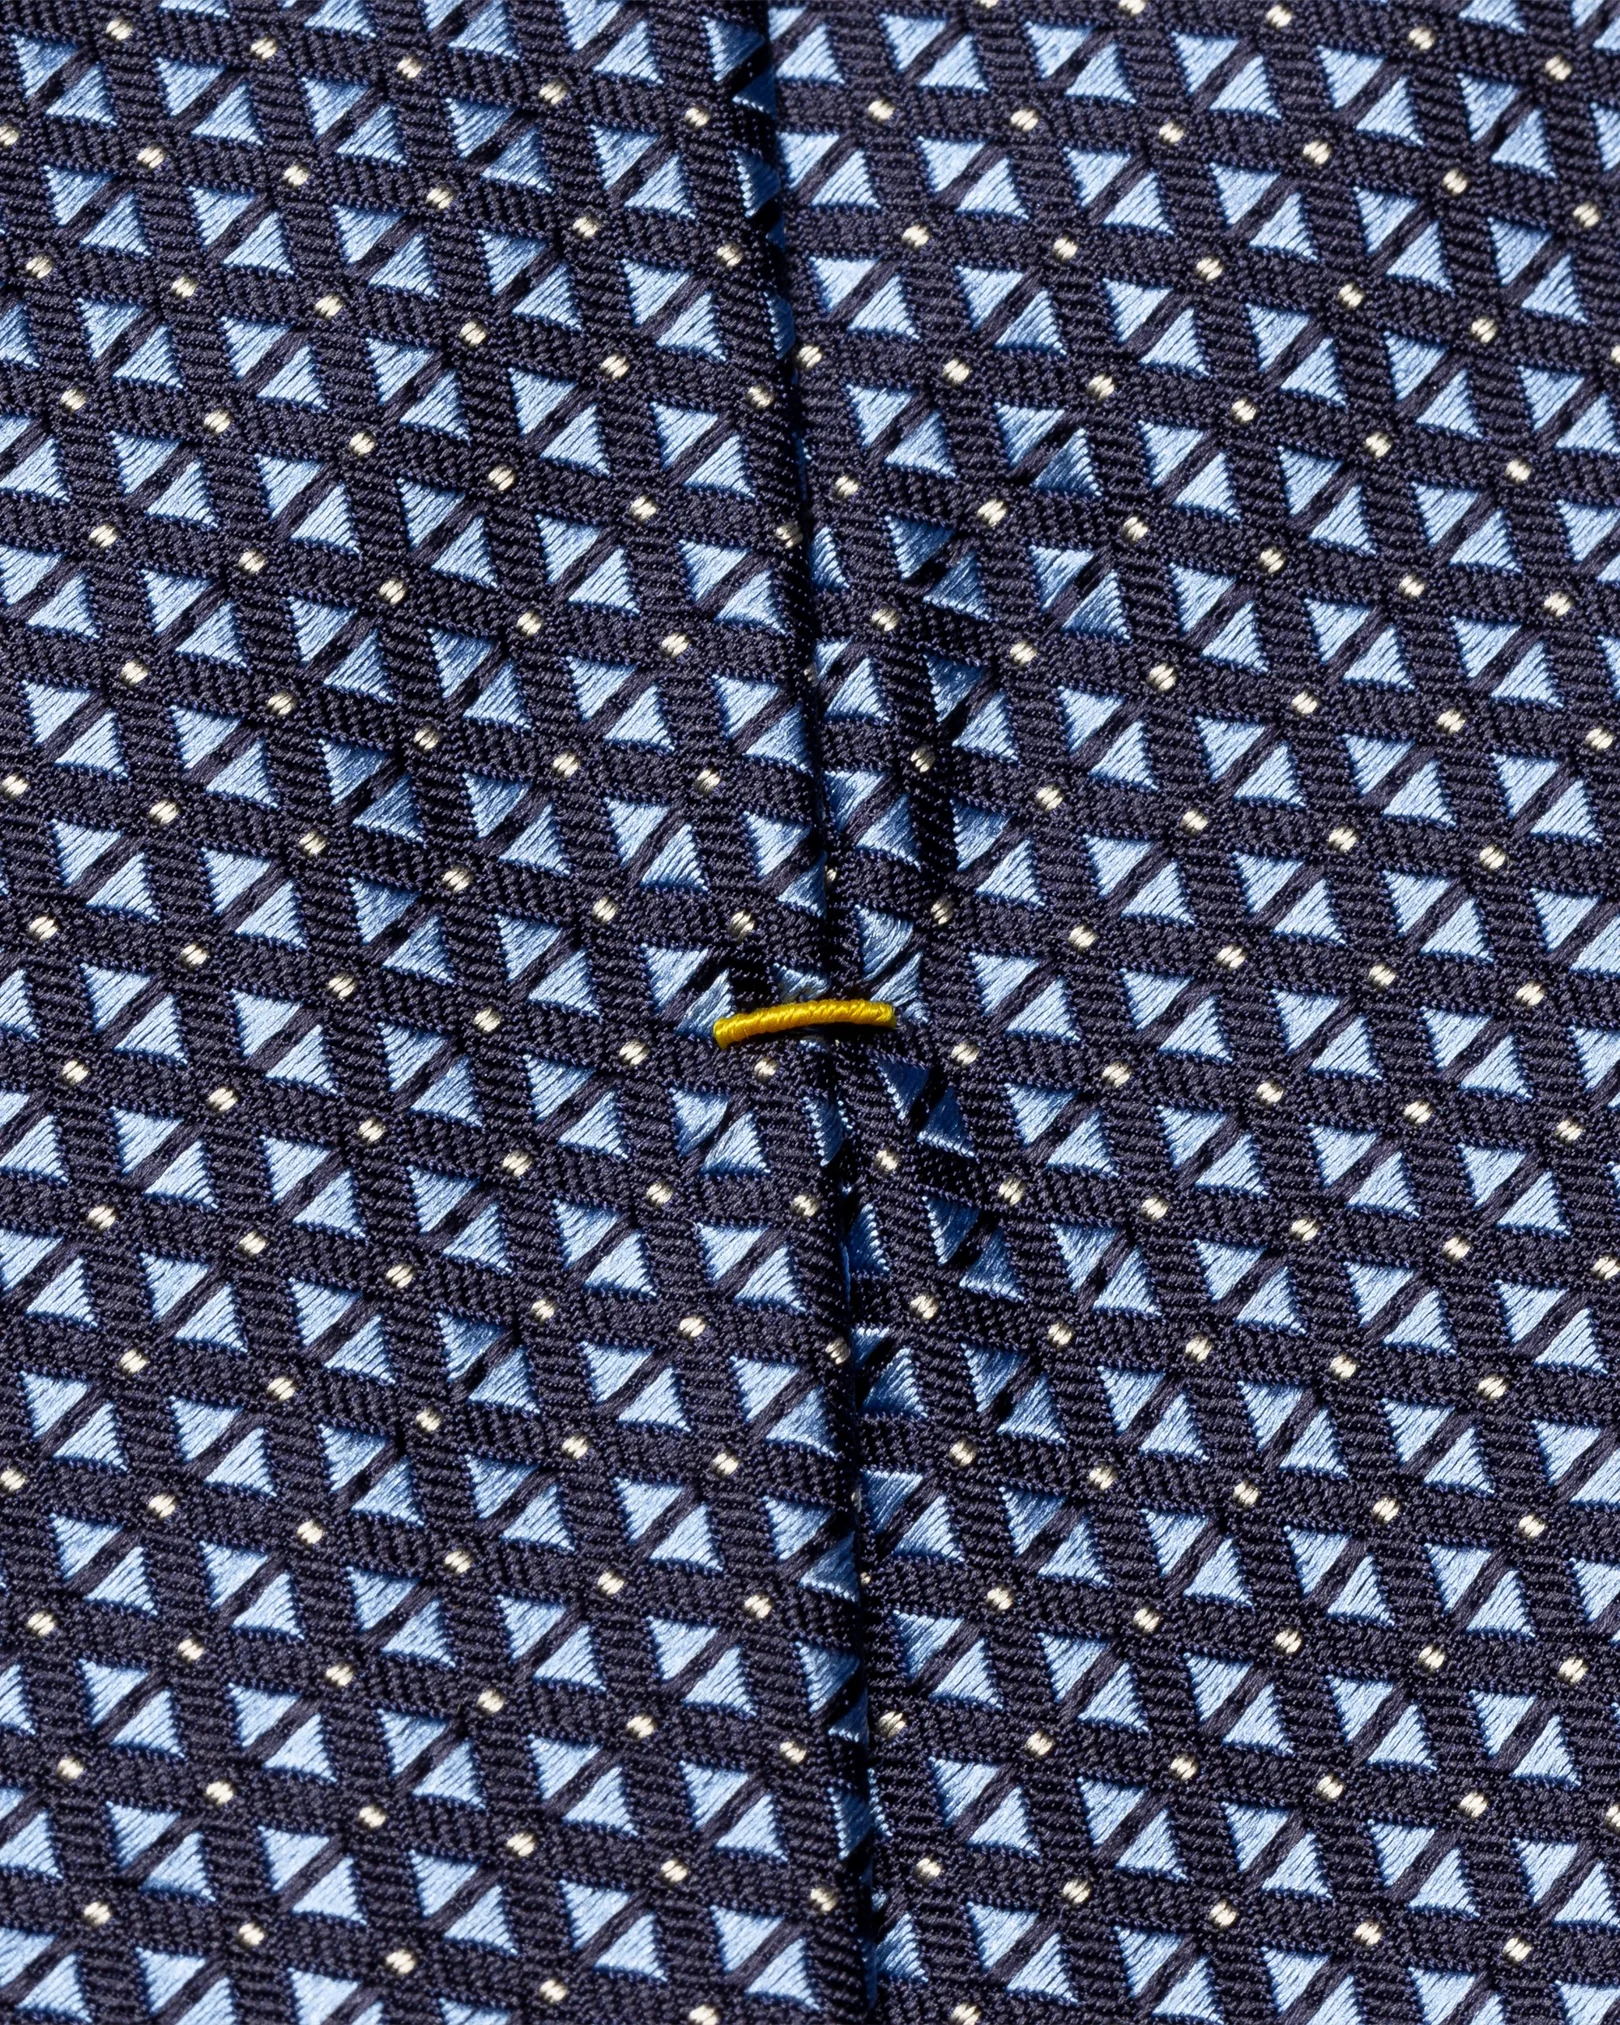 Eton - navy blue geometric jacuard tie